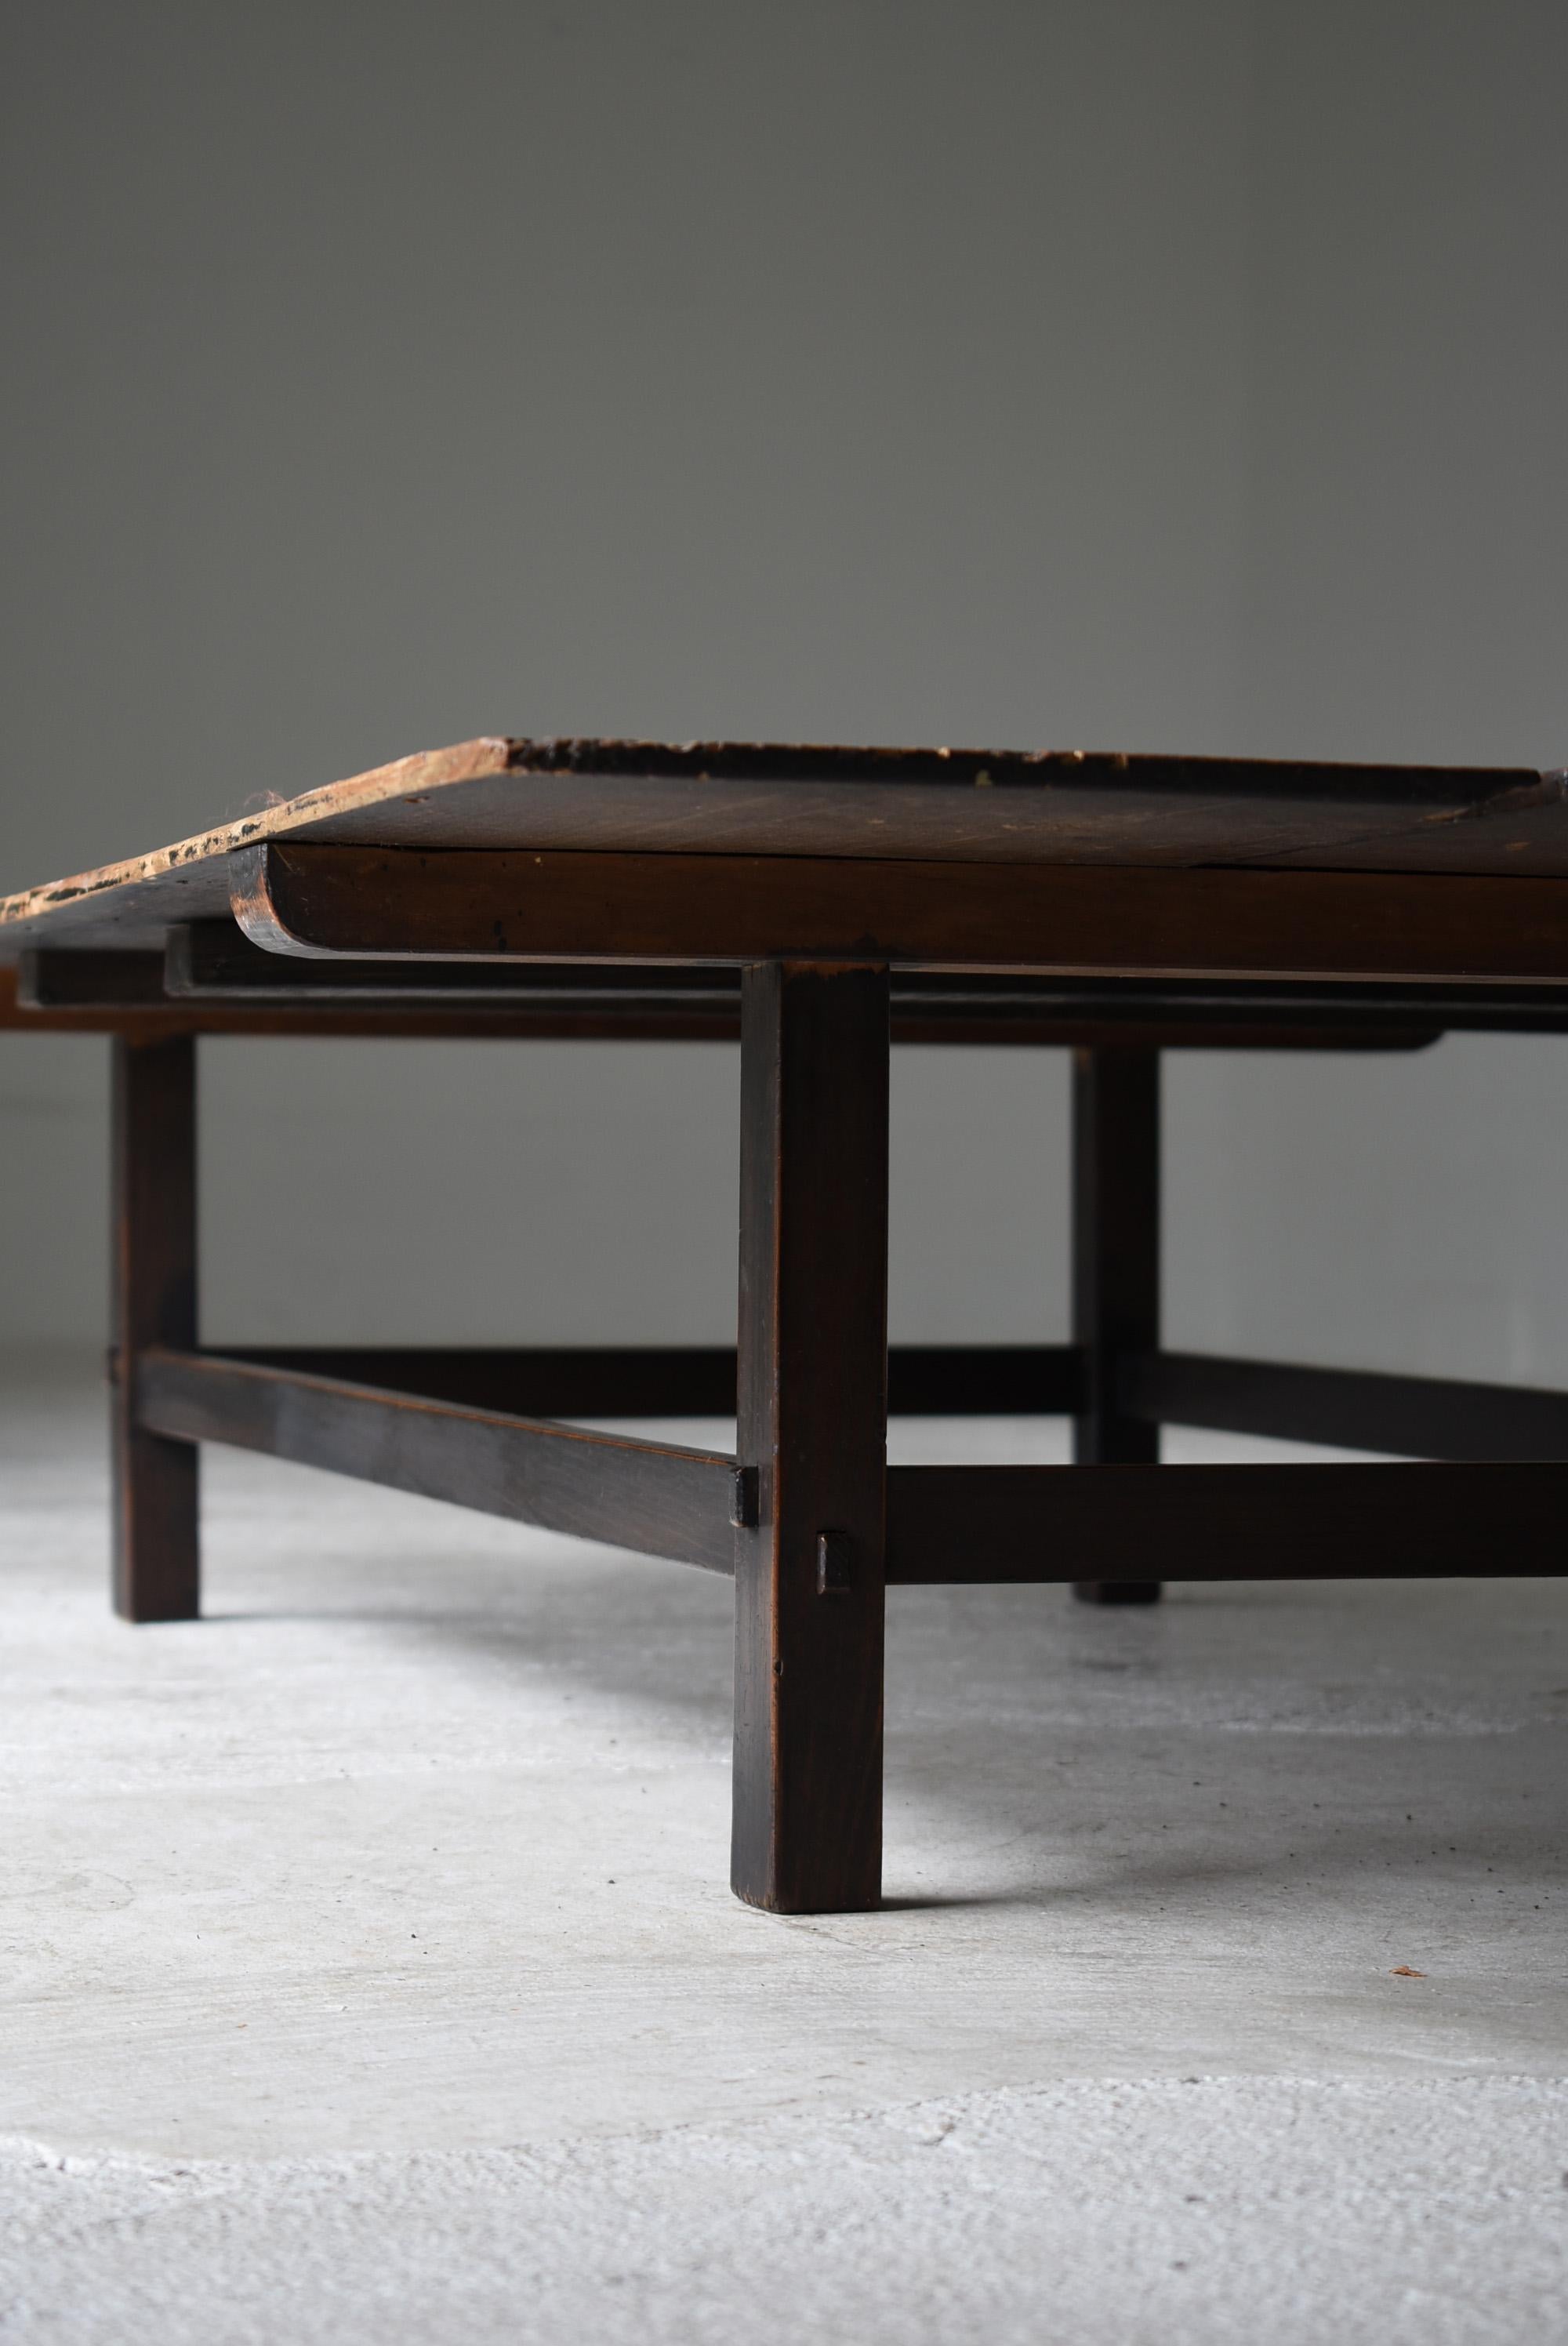 20th Century 1860s-1920s Japanese Antique Low Table / Furniture Meiji Period Wabisabi